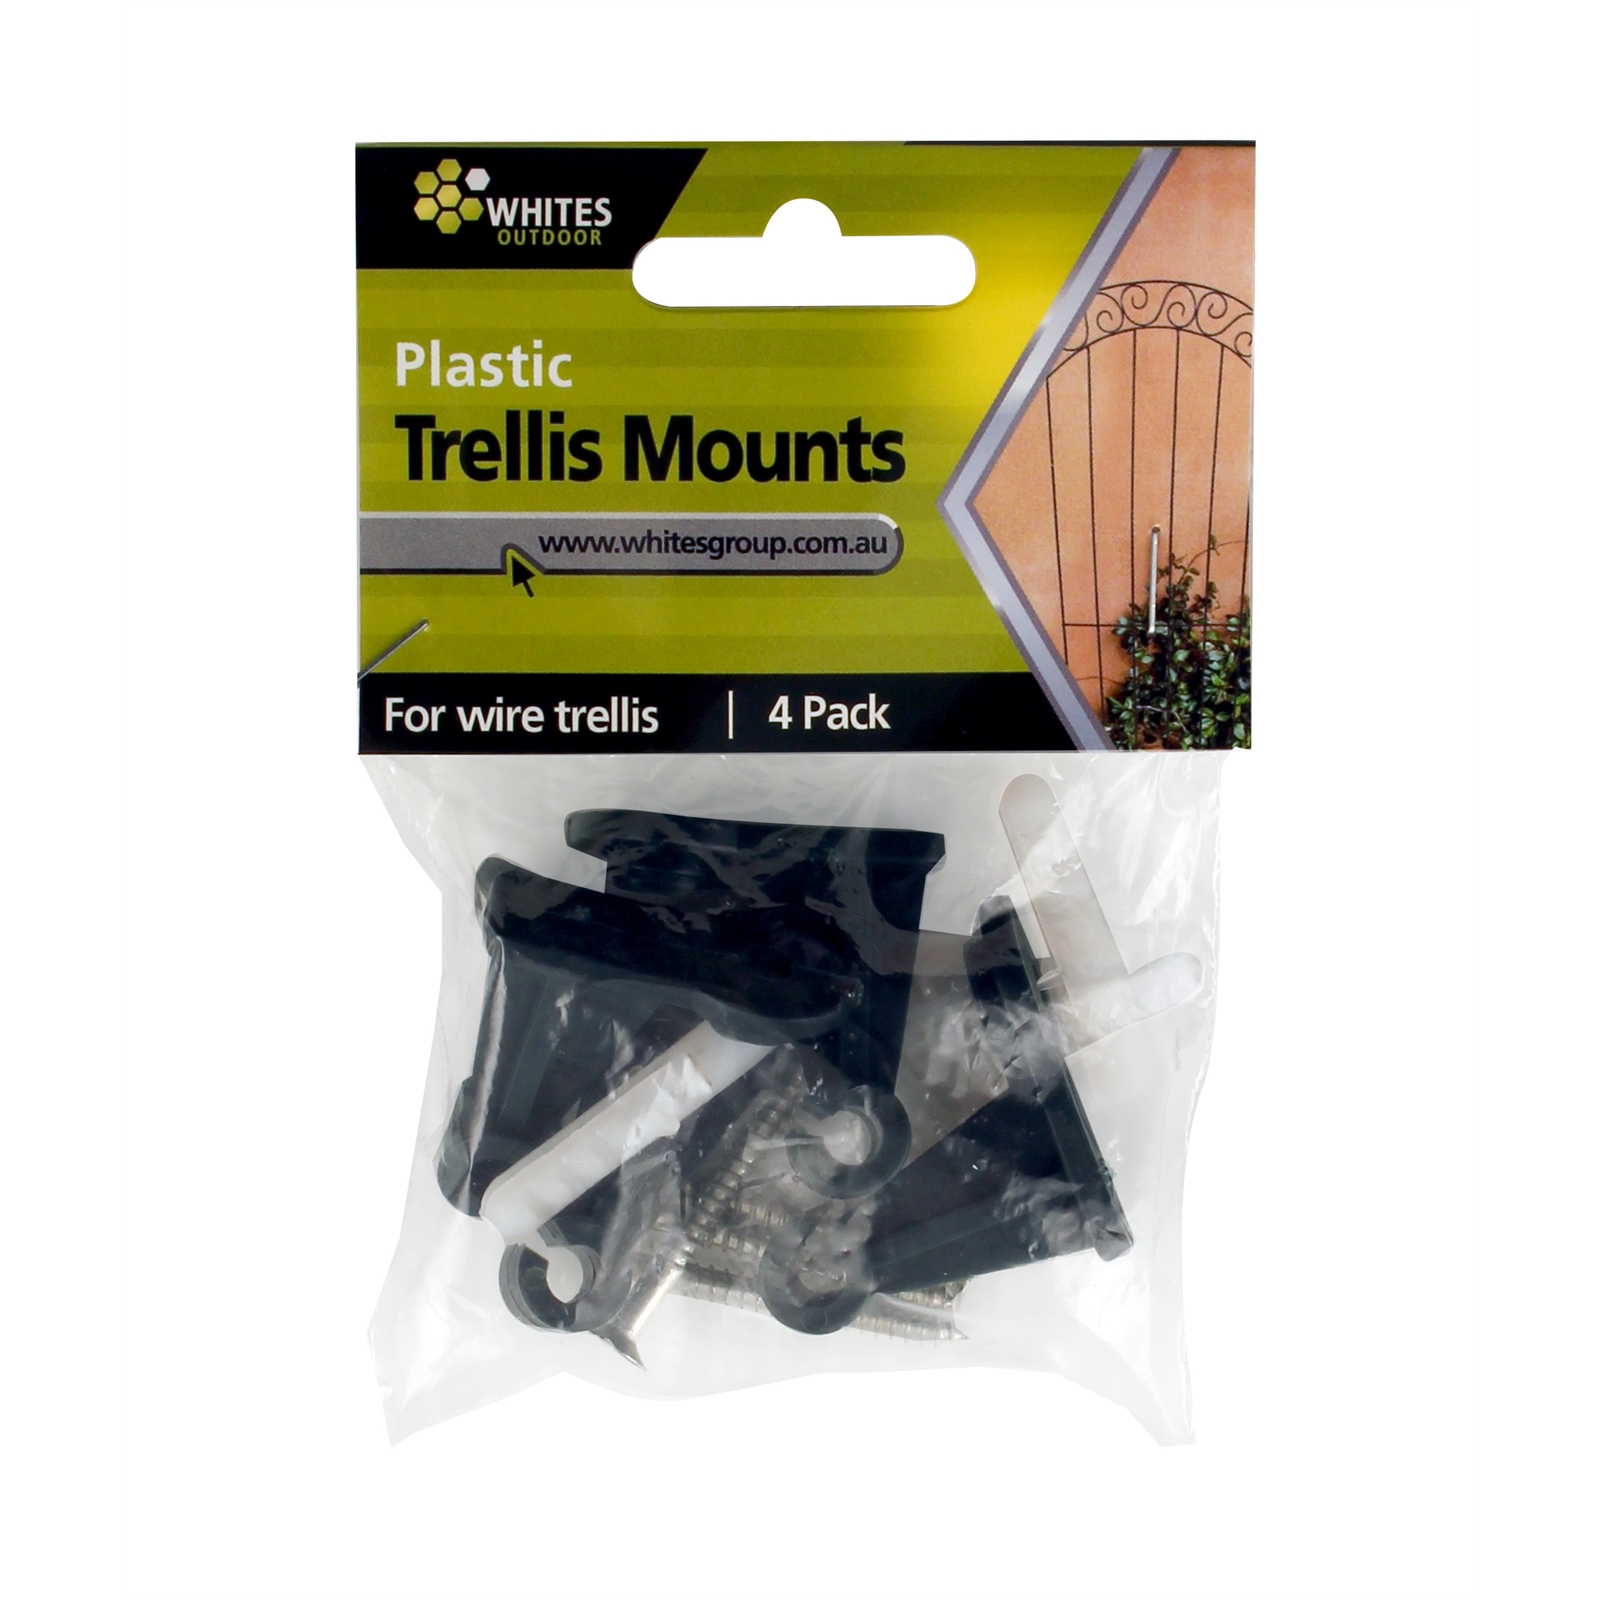 Whites Plastic Trellis Mounts - 4 Pack